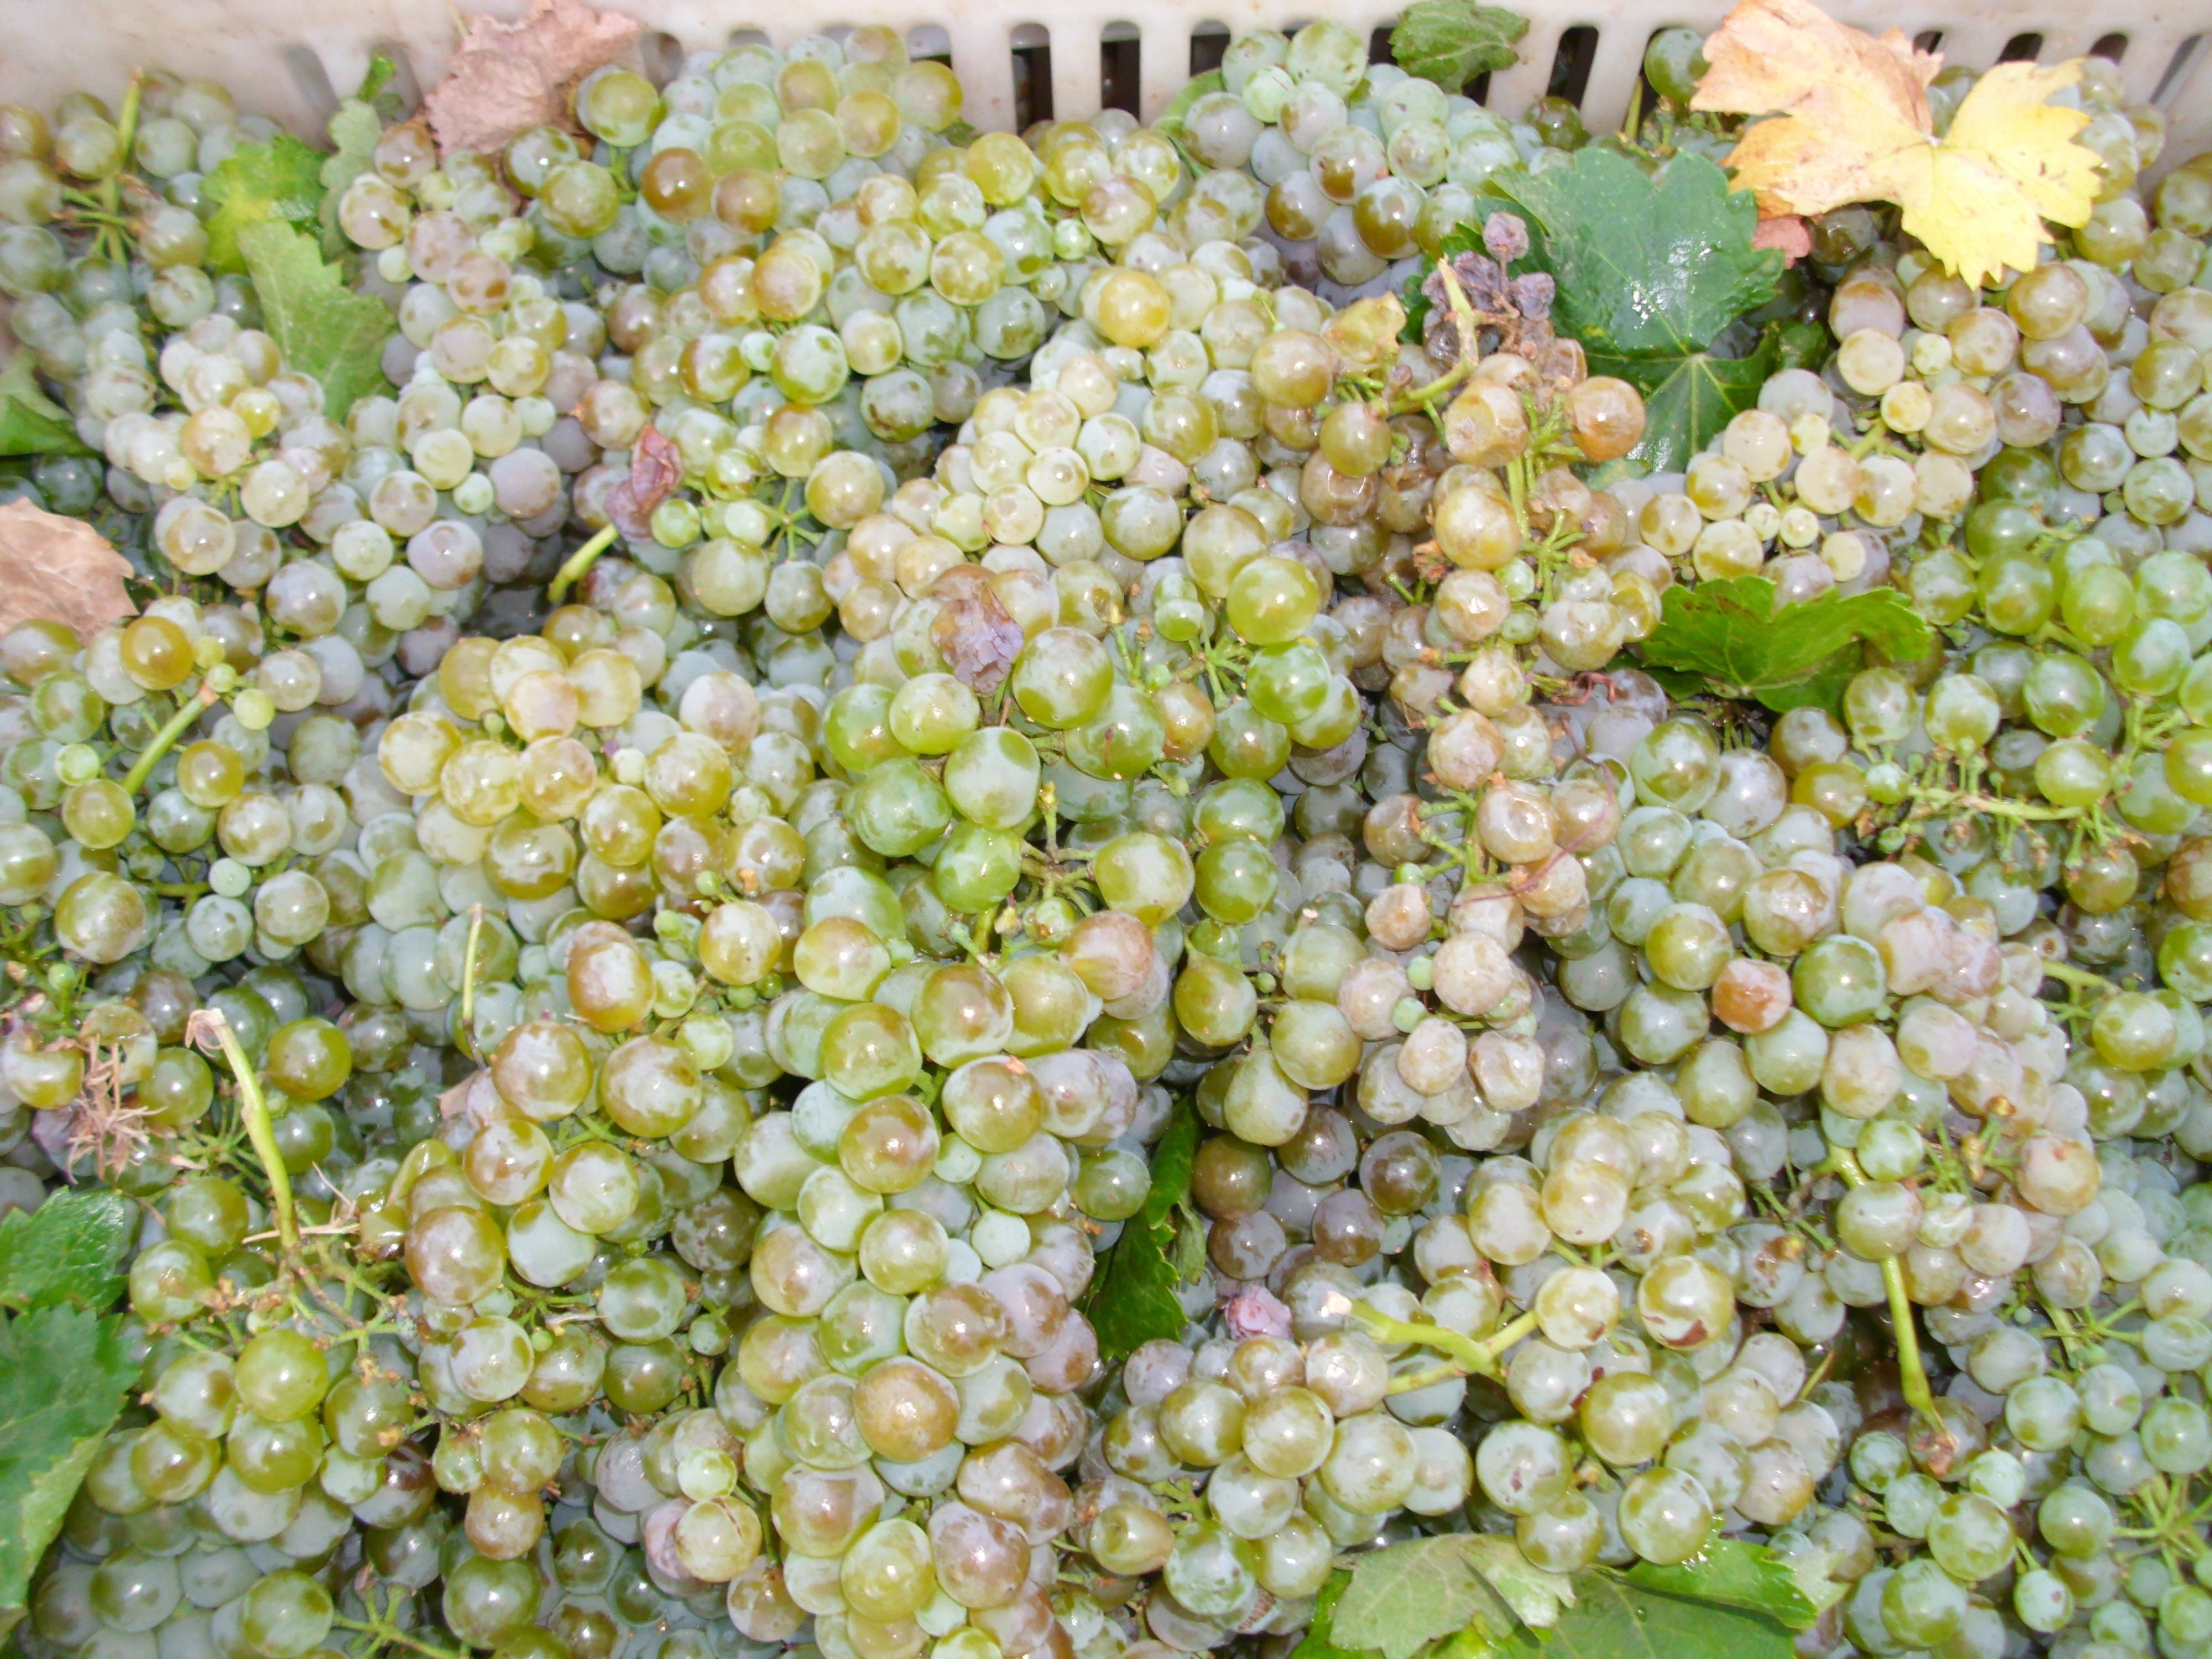 Grapes from Lebanon, Bekaa Valley